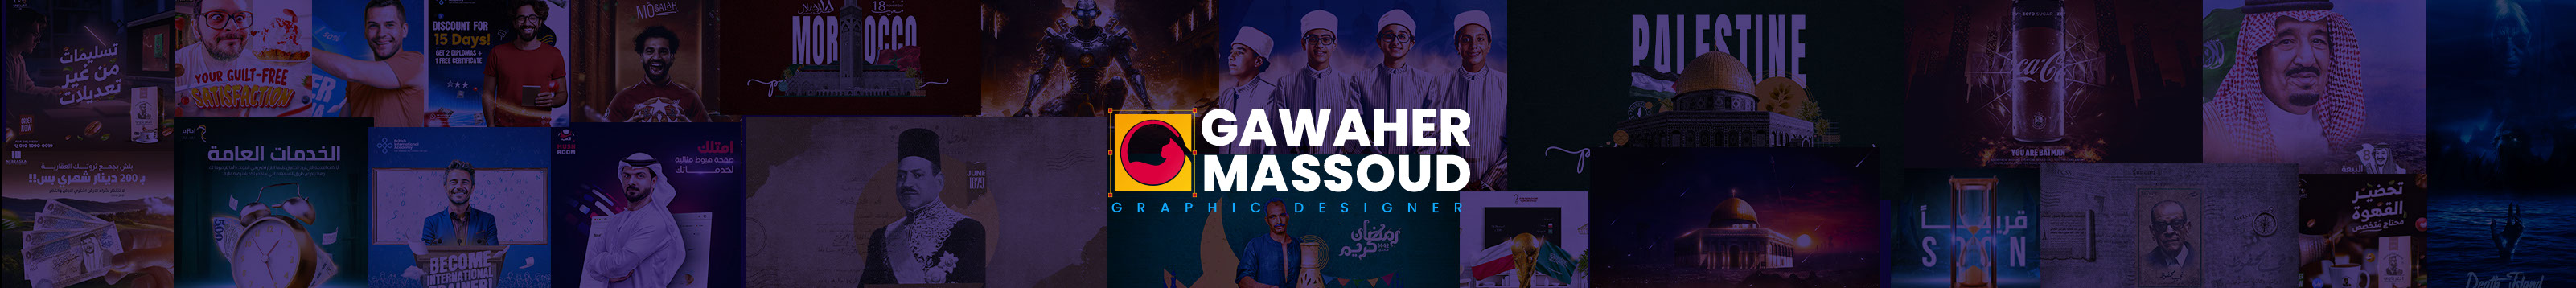 Gawaher Massoud's profile banner